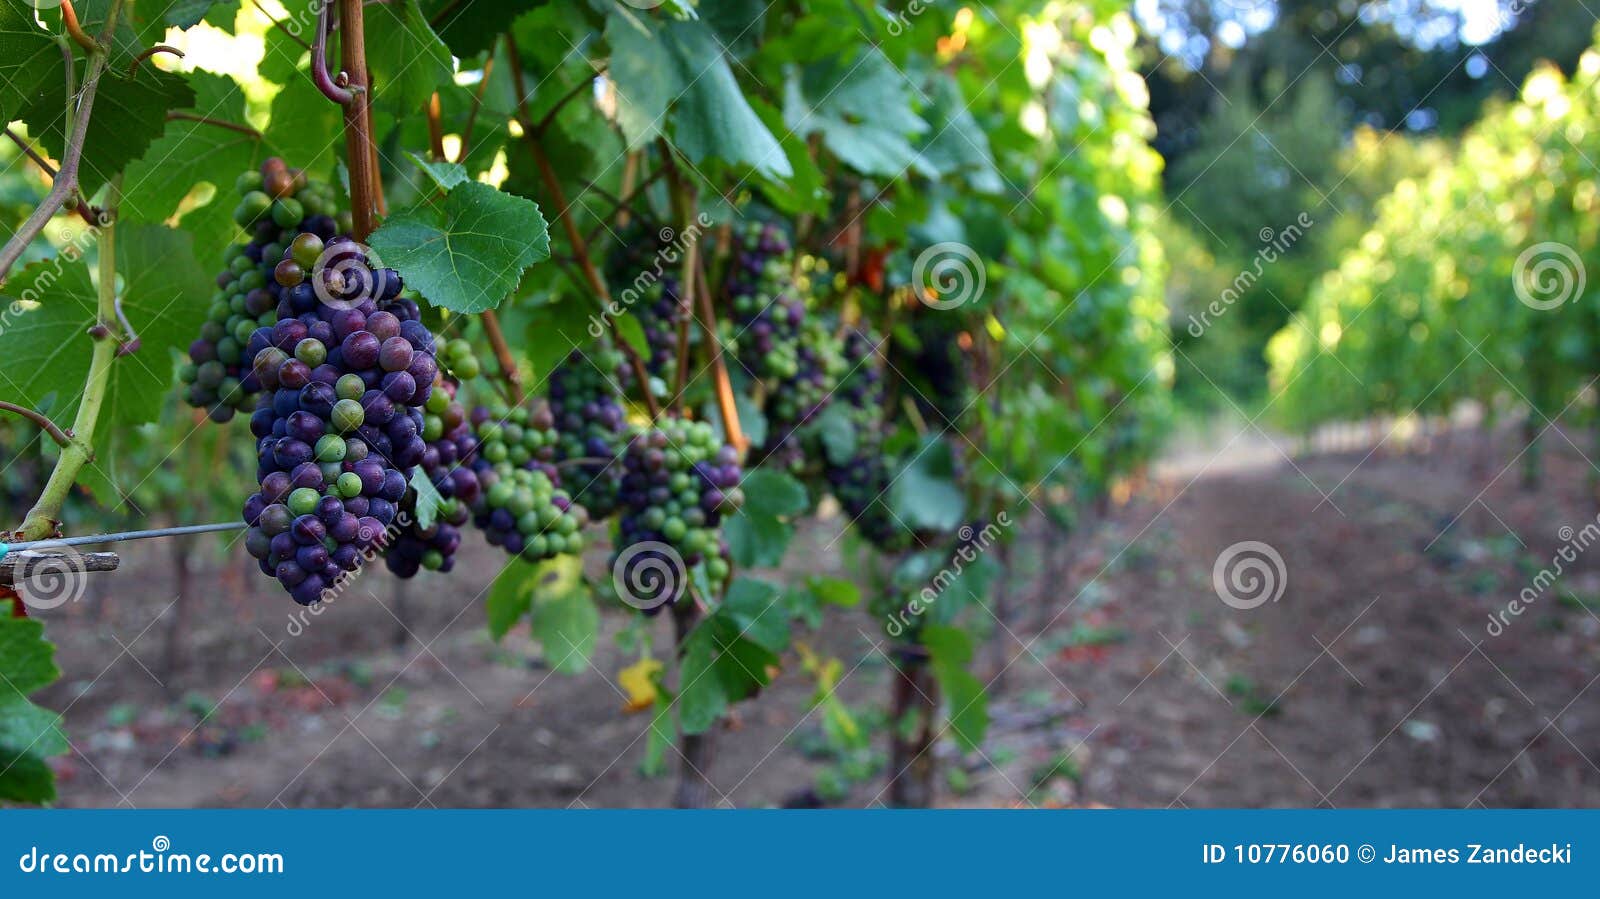 panoramic of pinot noir grapes